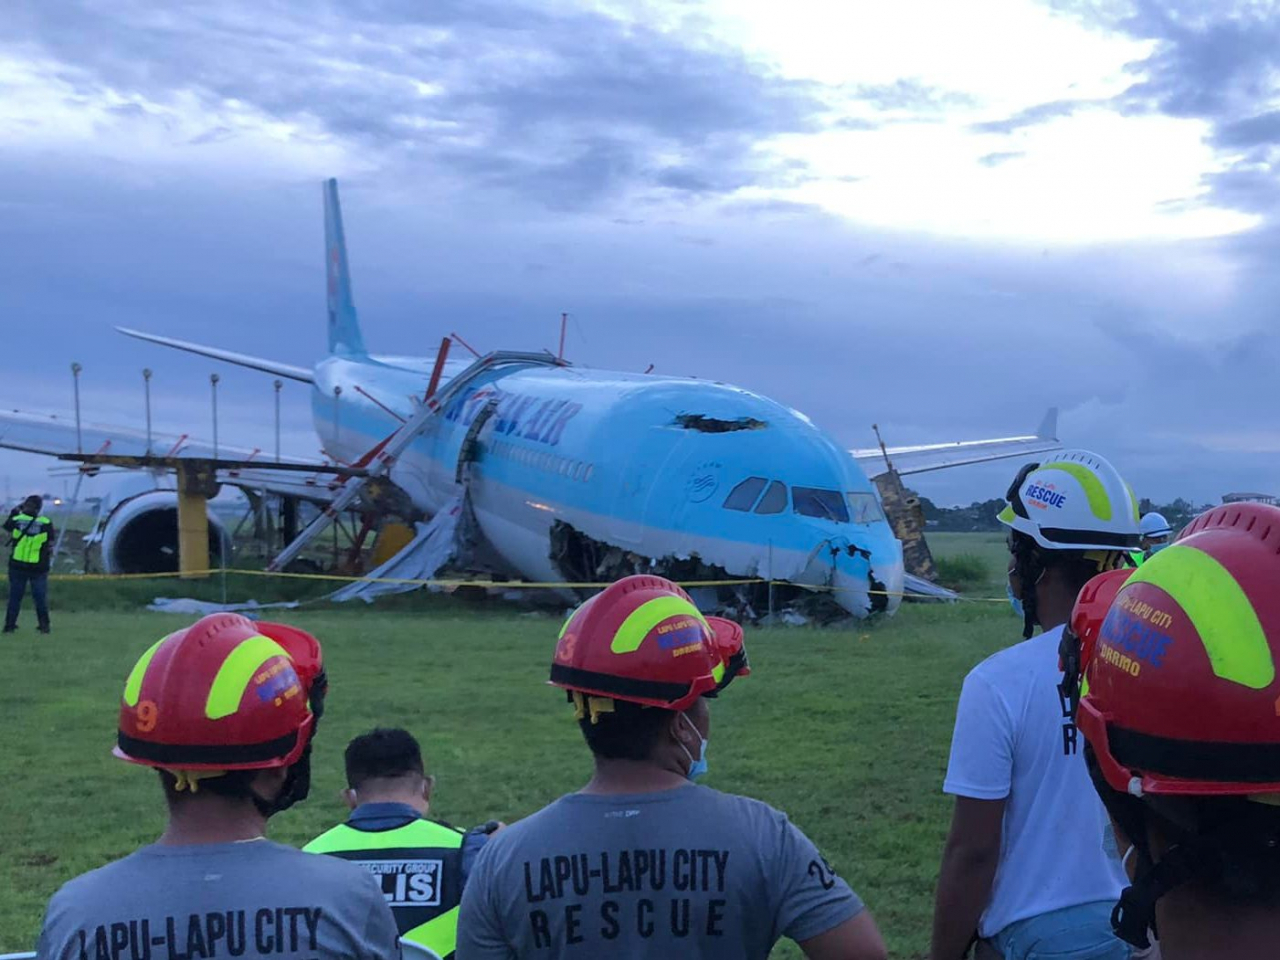 Korean Air flight KE631, partly ripped away, blocks the single runway of the Cebu International Airport. (Twitter)